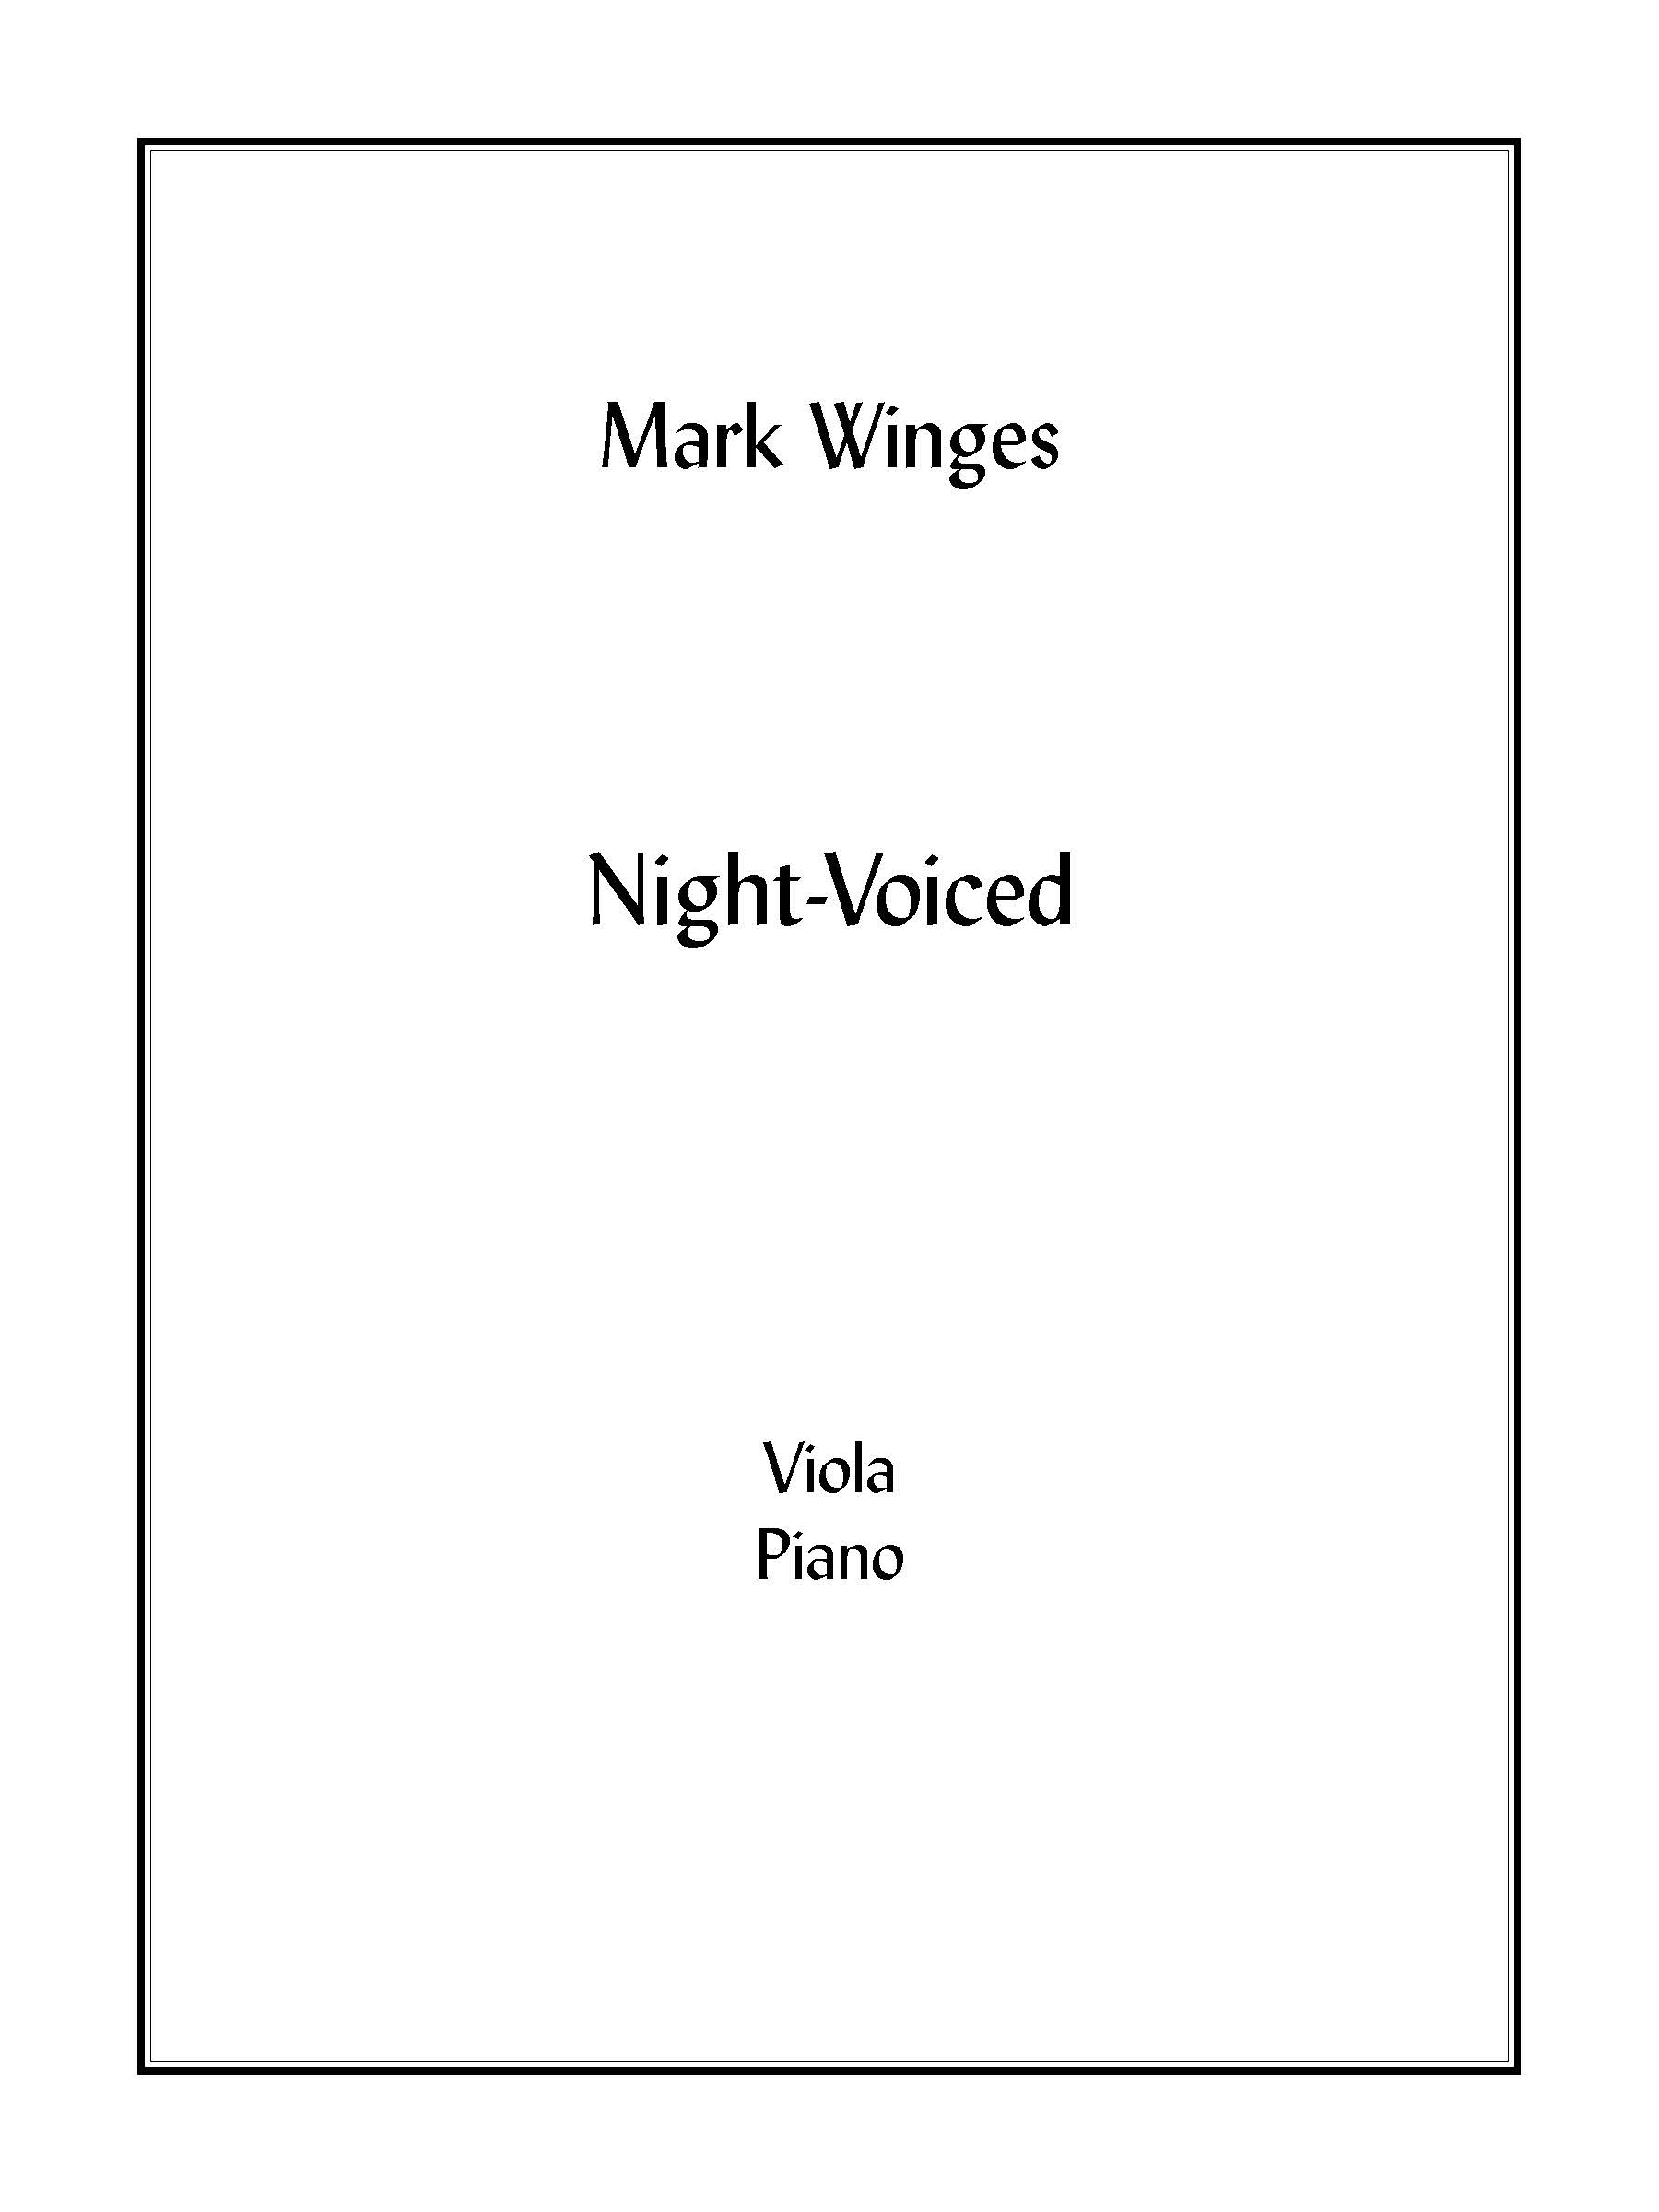 Night-Voiced (piano version) for Viola & Piano